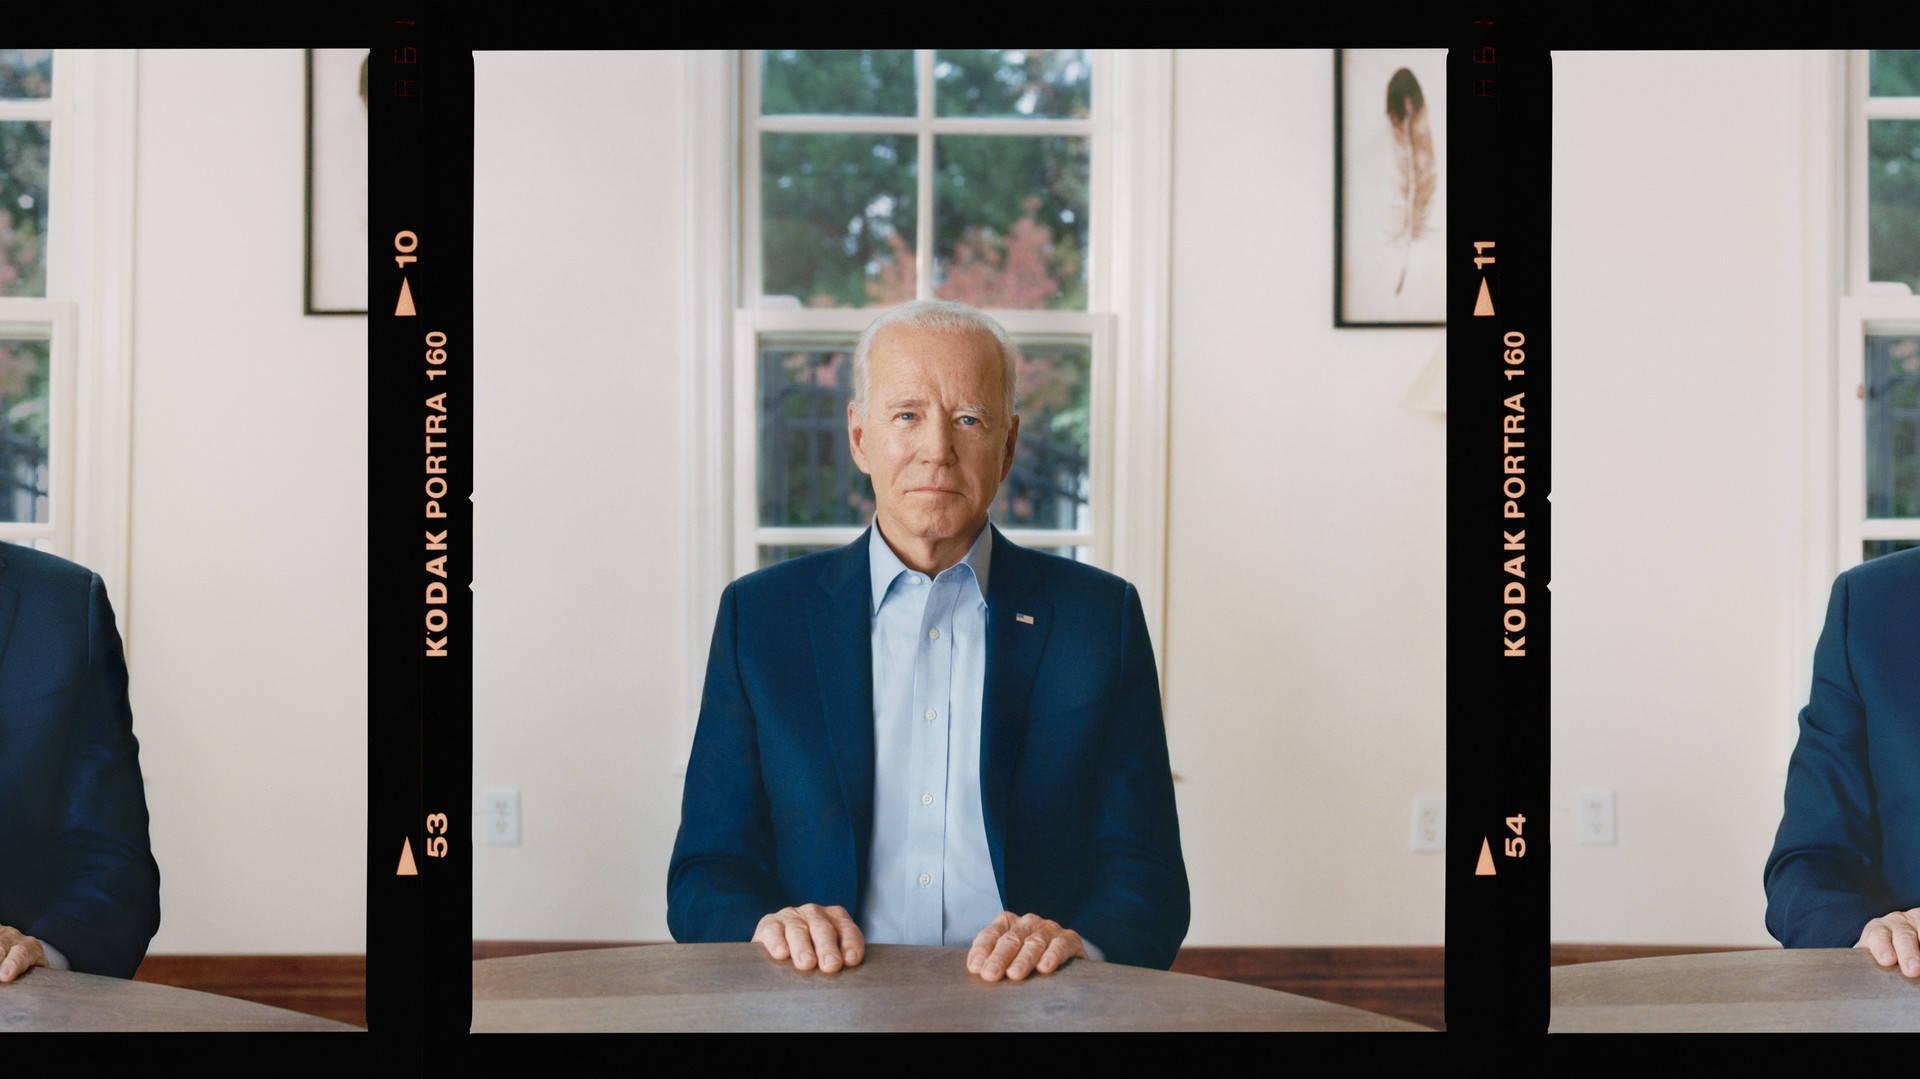 Download US President Joe Biden Captured on Kodak Film Wallpaper